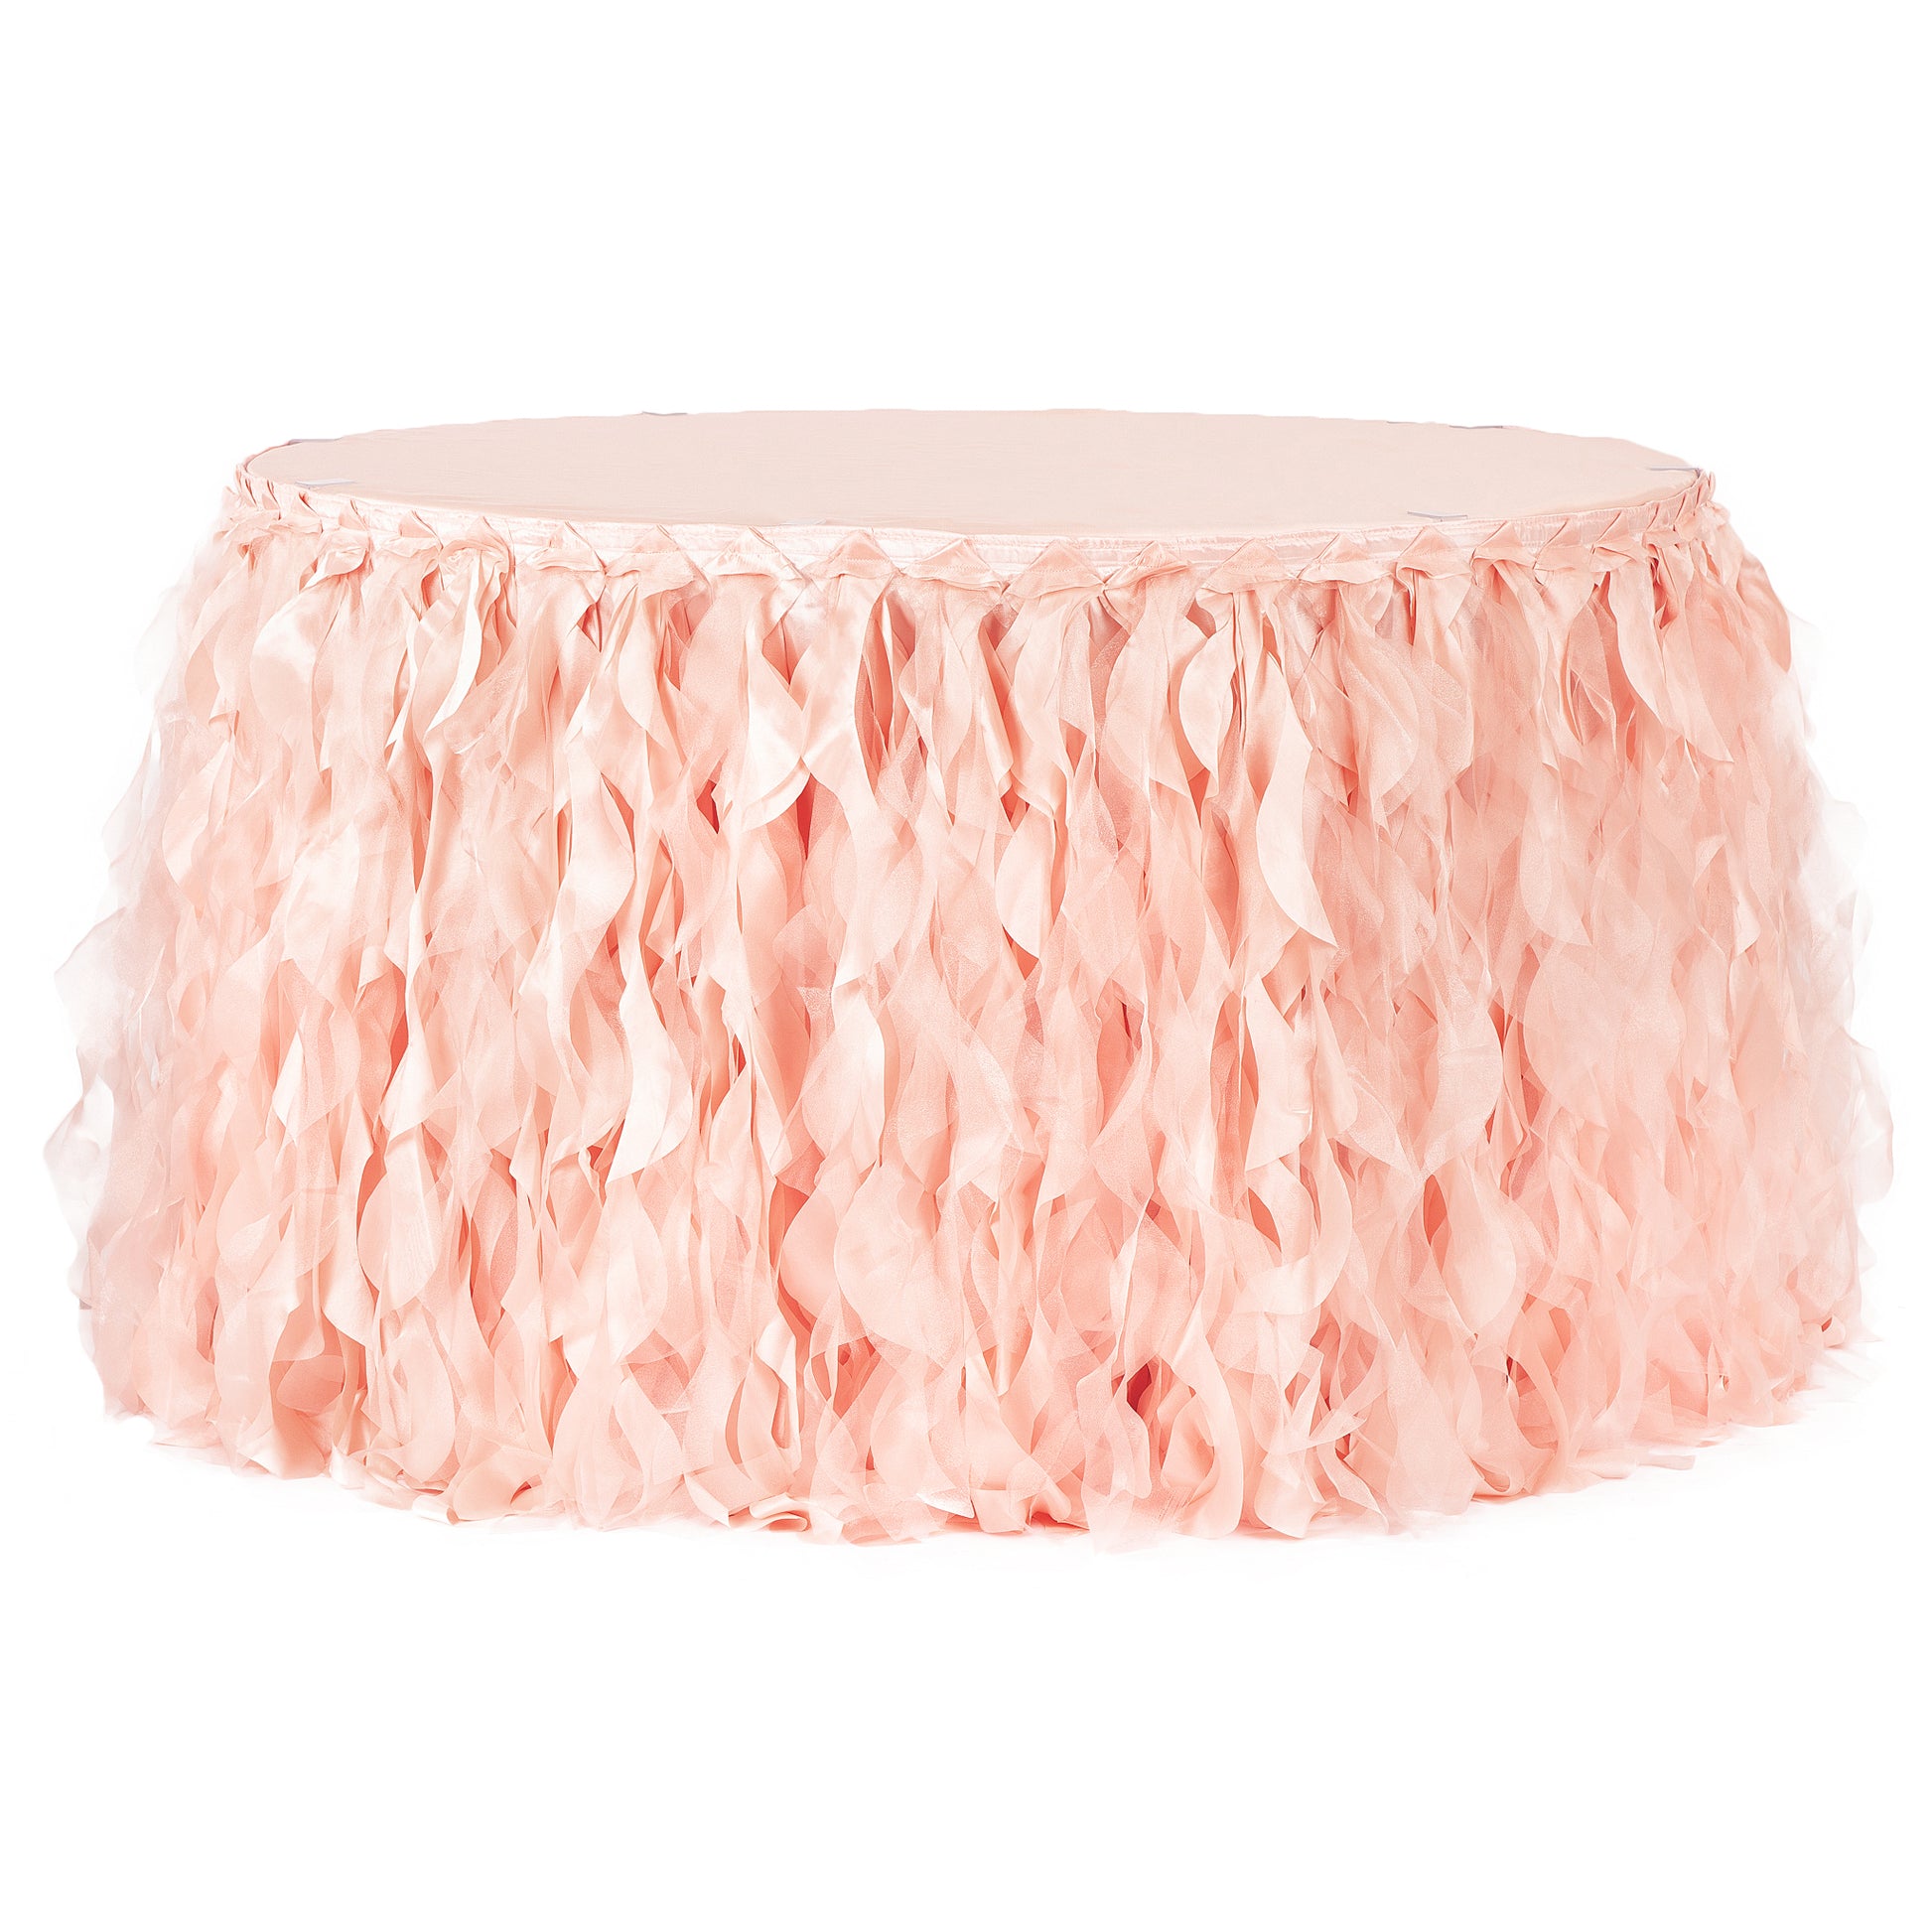 Curly Willow 17ft Table Skirt - Blush/Rose Gold - CV Linens